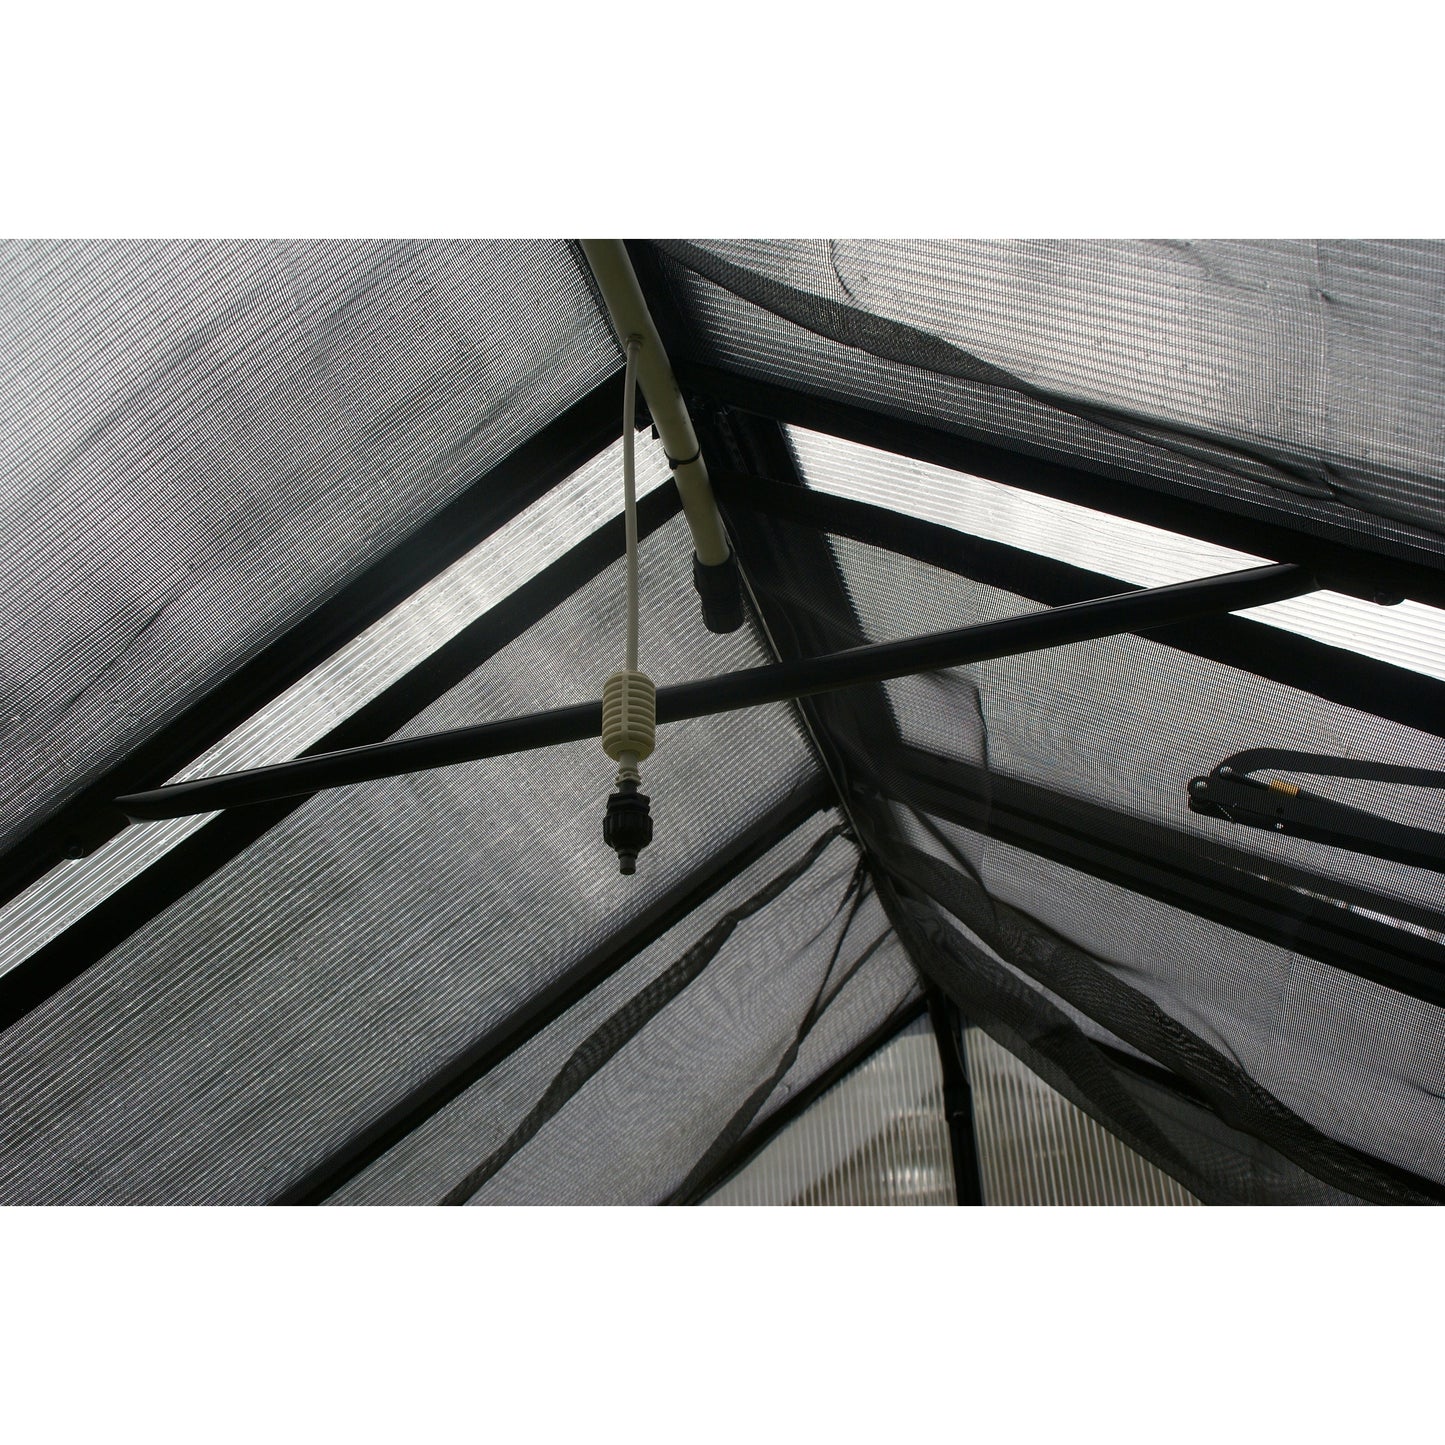 Mont Greenhouse 8FTx 8FT - Black Finish - Premium Package MONT-8-BK-PREMIUM